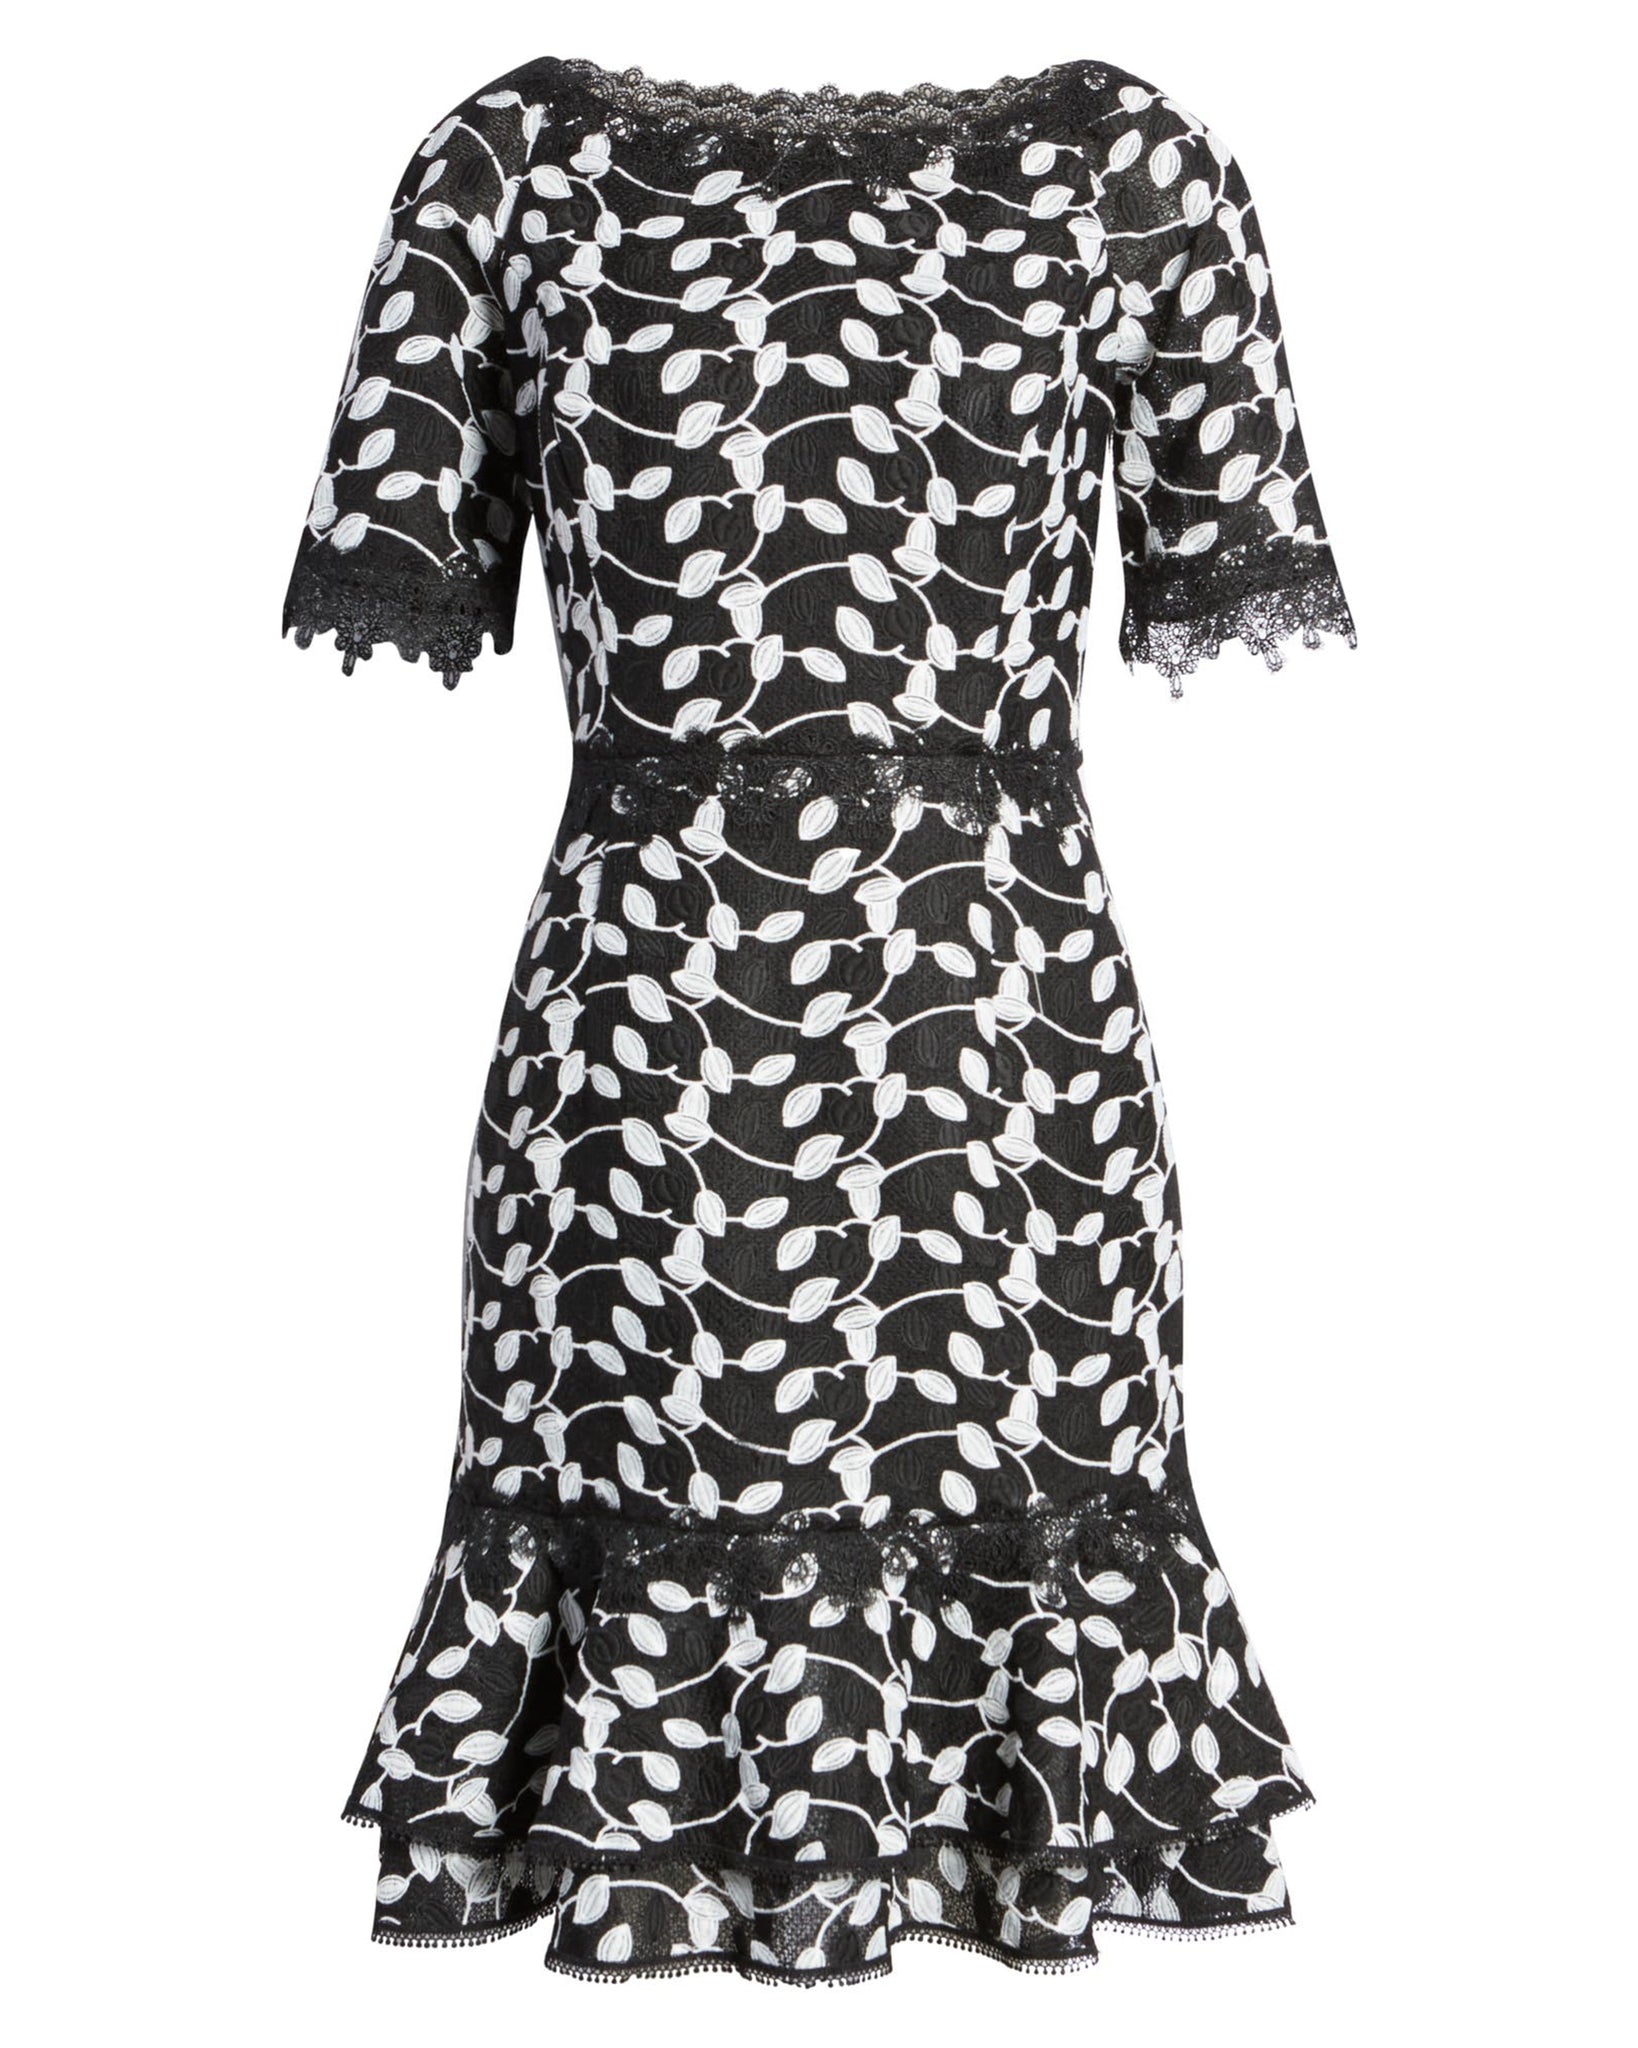 Buy Online Two Tone Lace Dress in Black ...